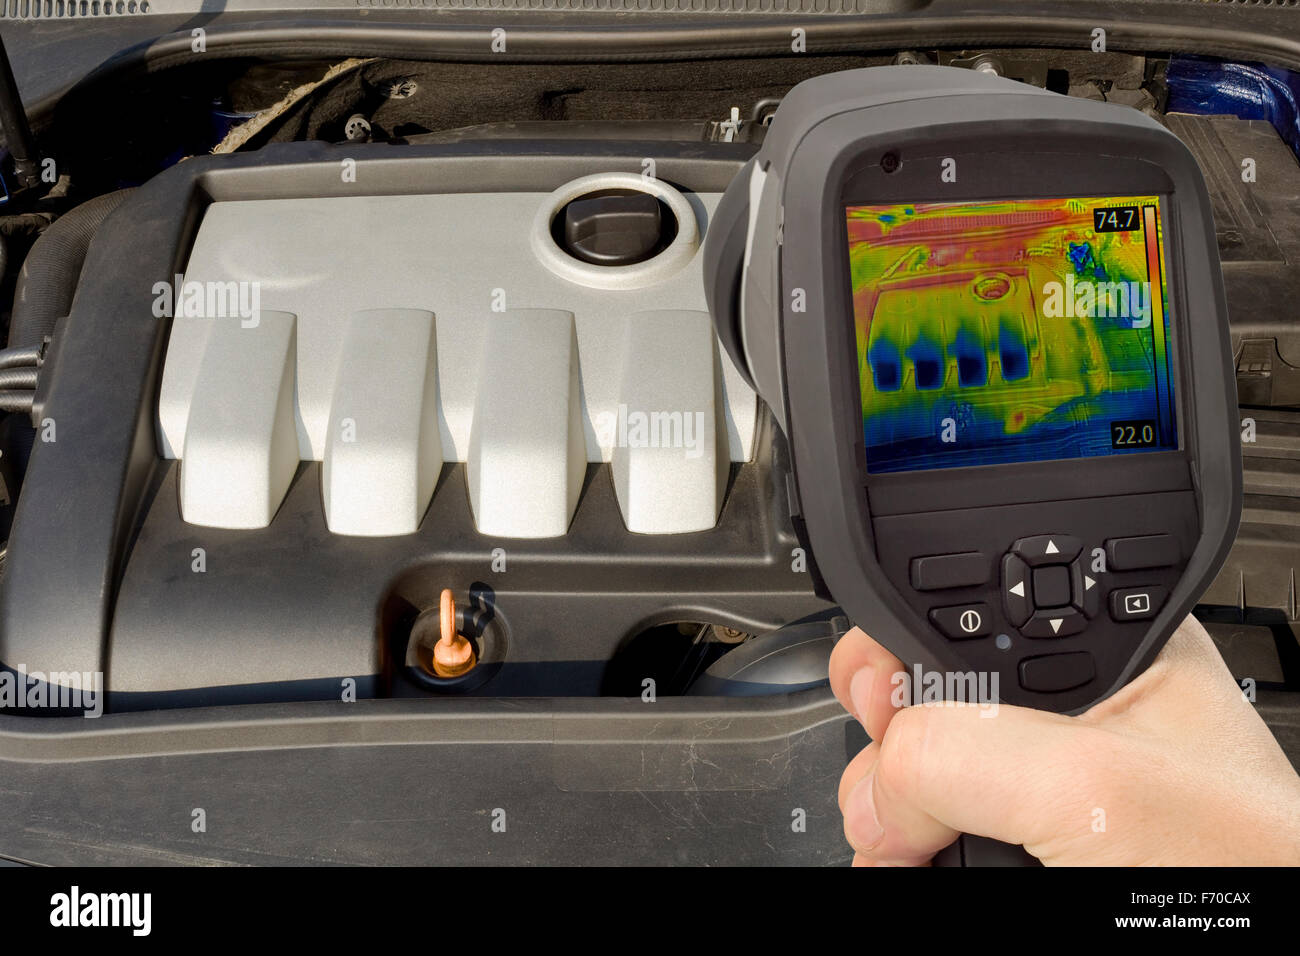 Car engine thermal image -Fotos und -Bildmaterial in hoher Auflösung – Alamy